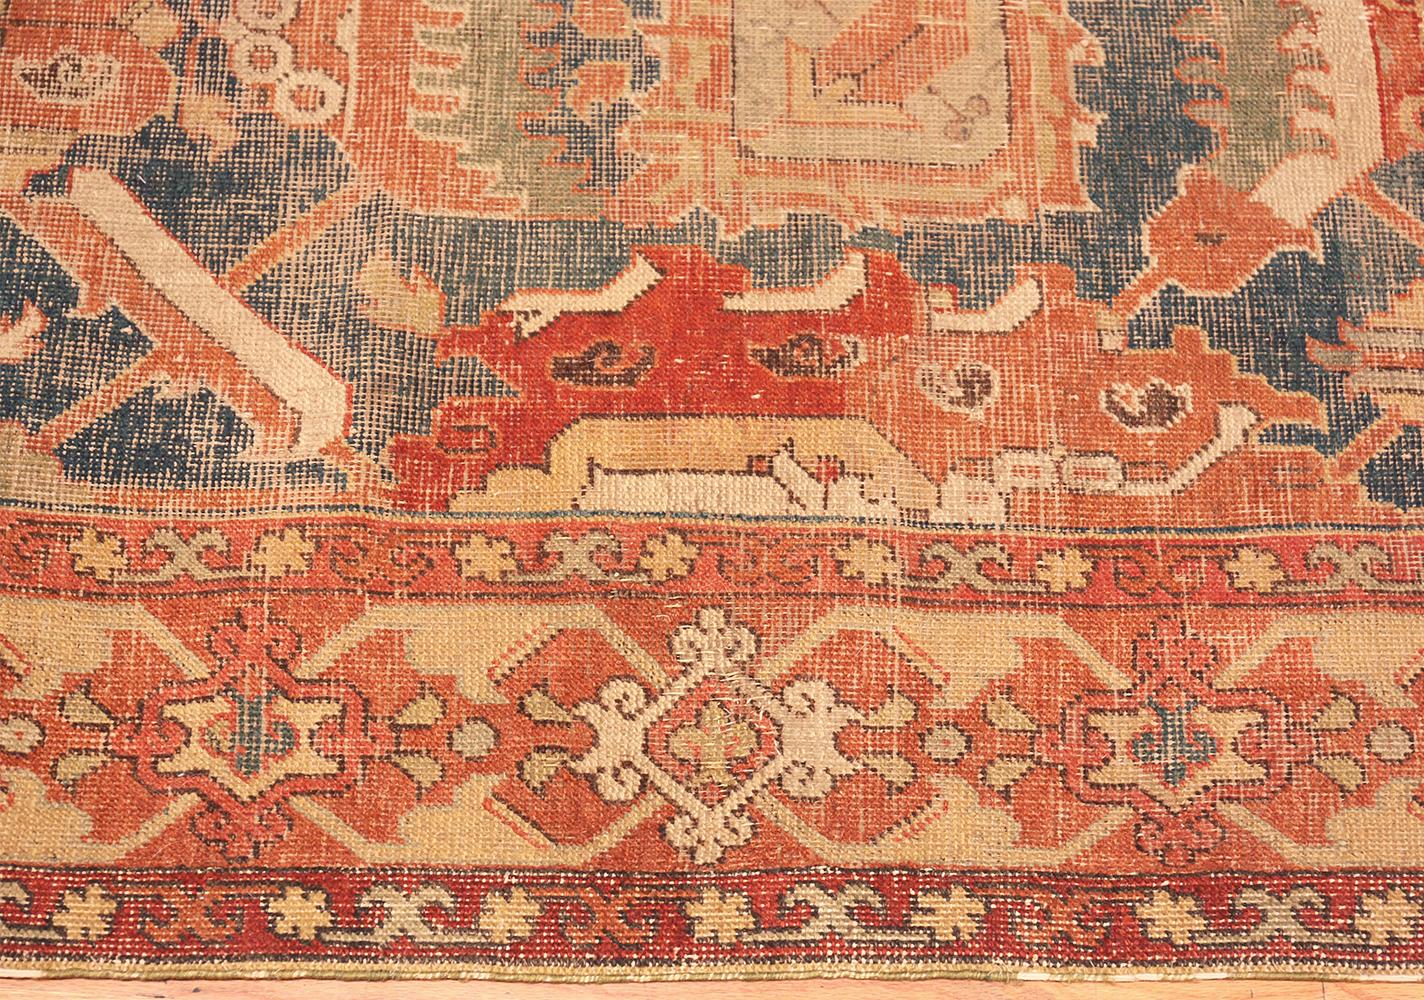 Breathtaking collectible rare antique 17th century Caucasian Karabagh rug, country of weaving origin: Caucasus, date circa 17th century. Size: 5 ft 7 in x 14 ft (1.7 m x 4.27 m).